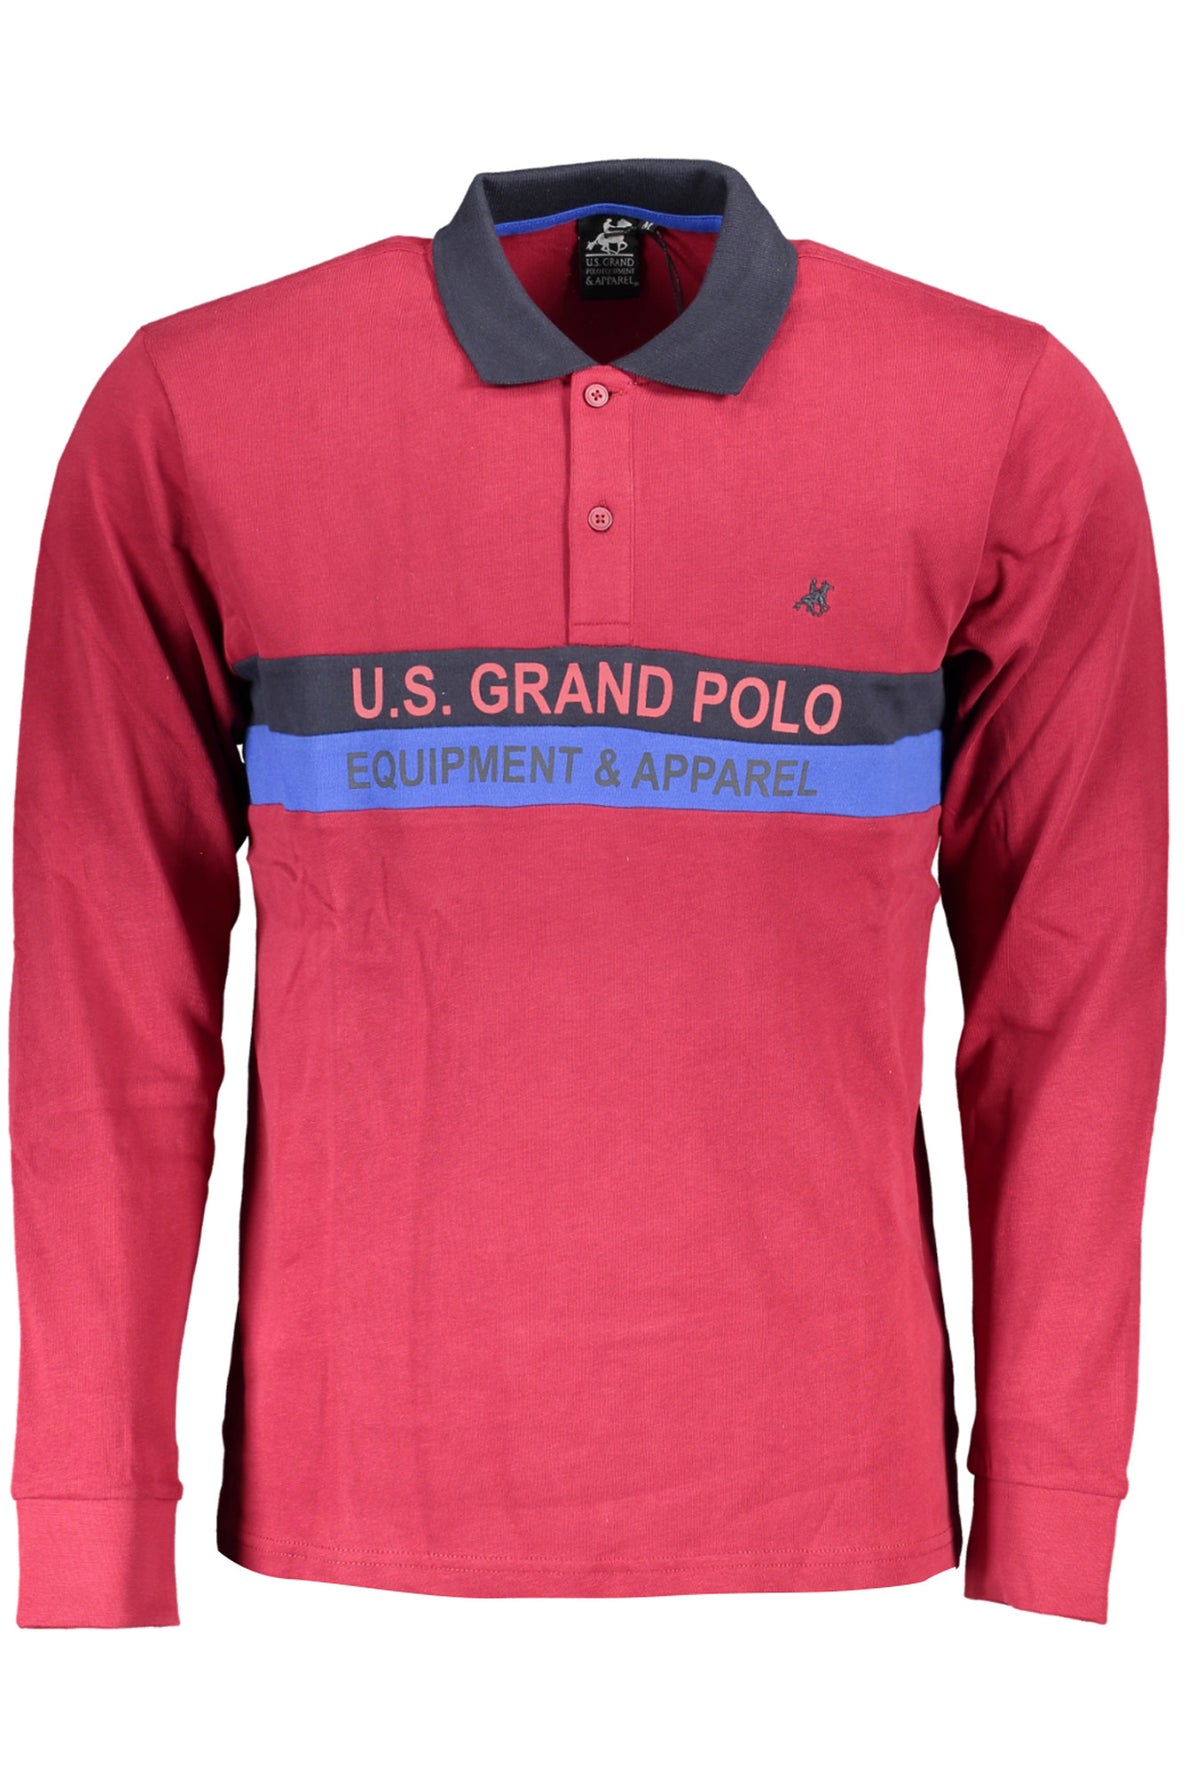 U.S. GRAND POLO